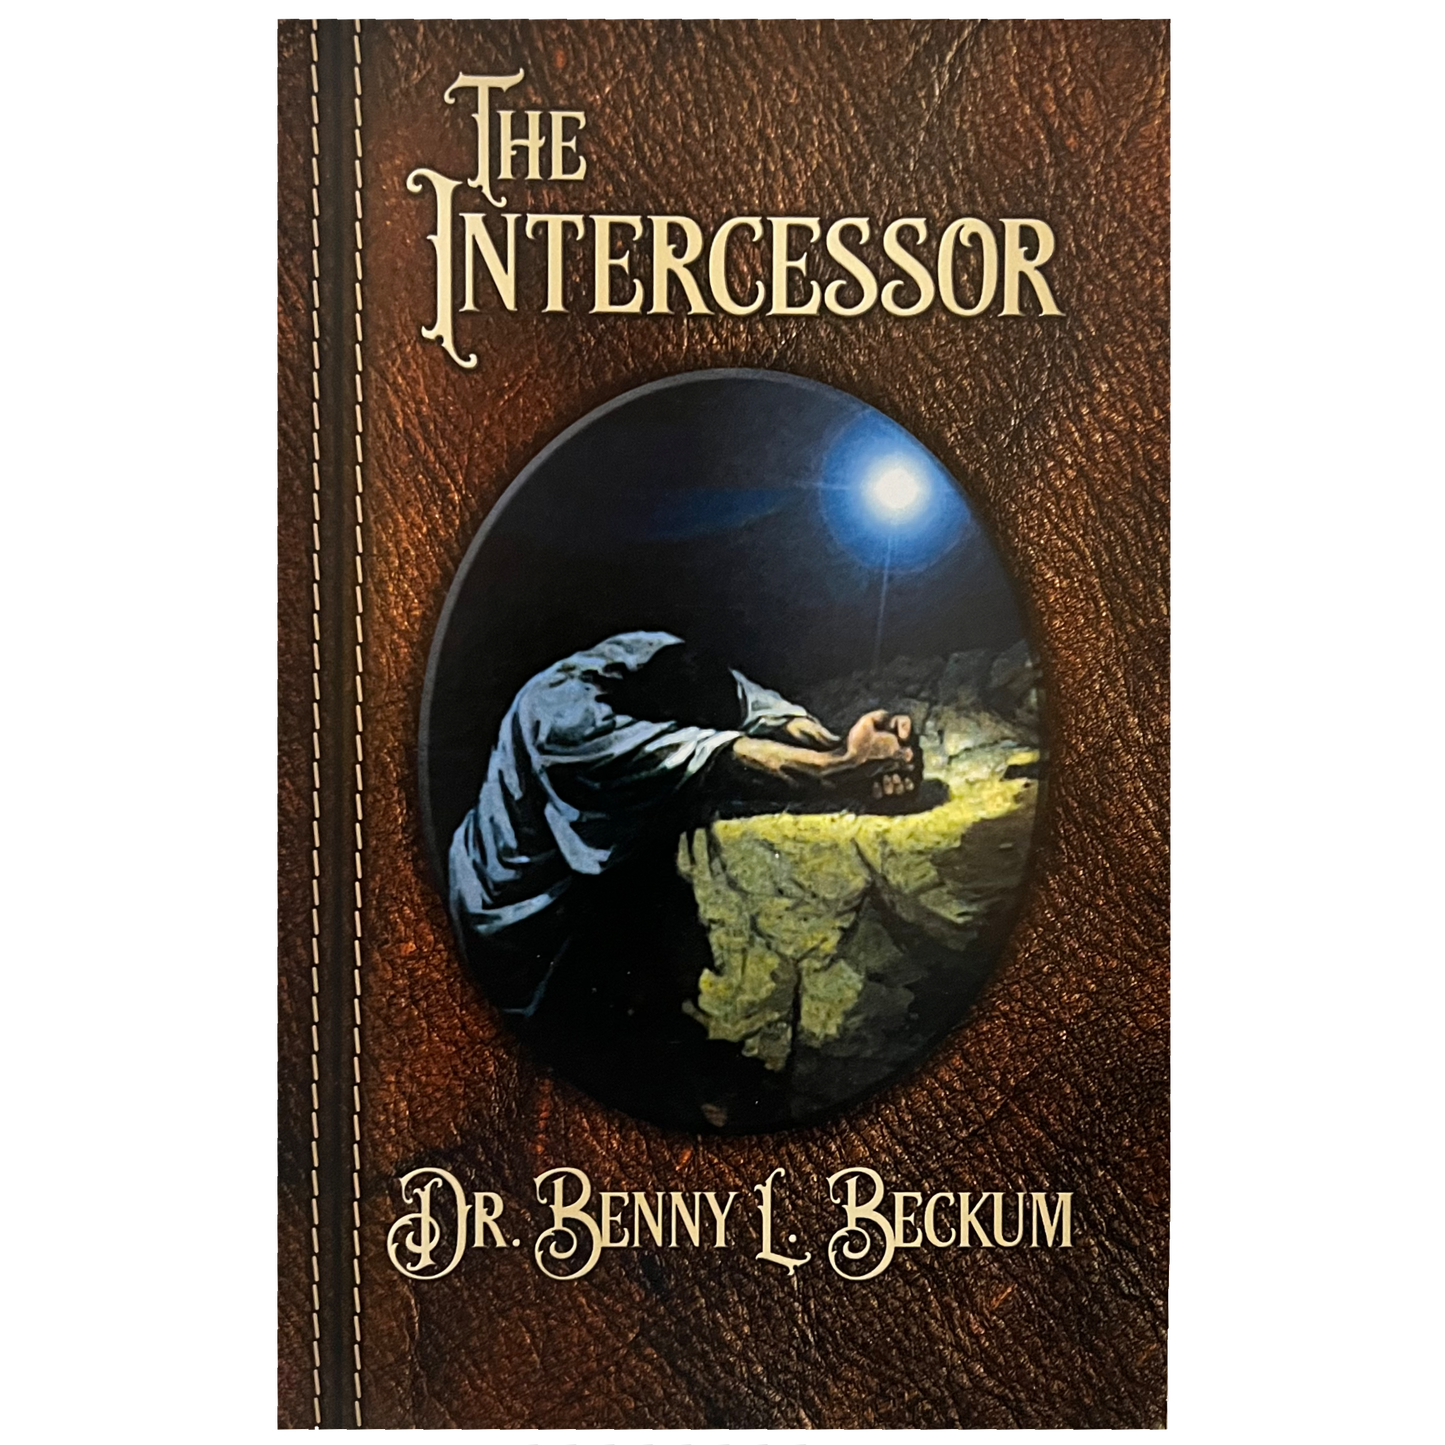 The Intercessor